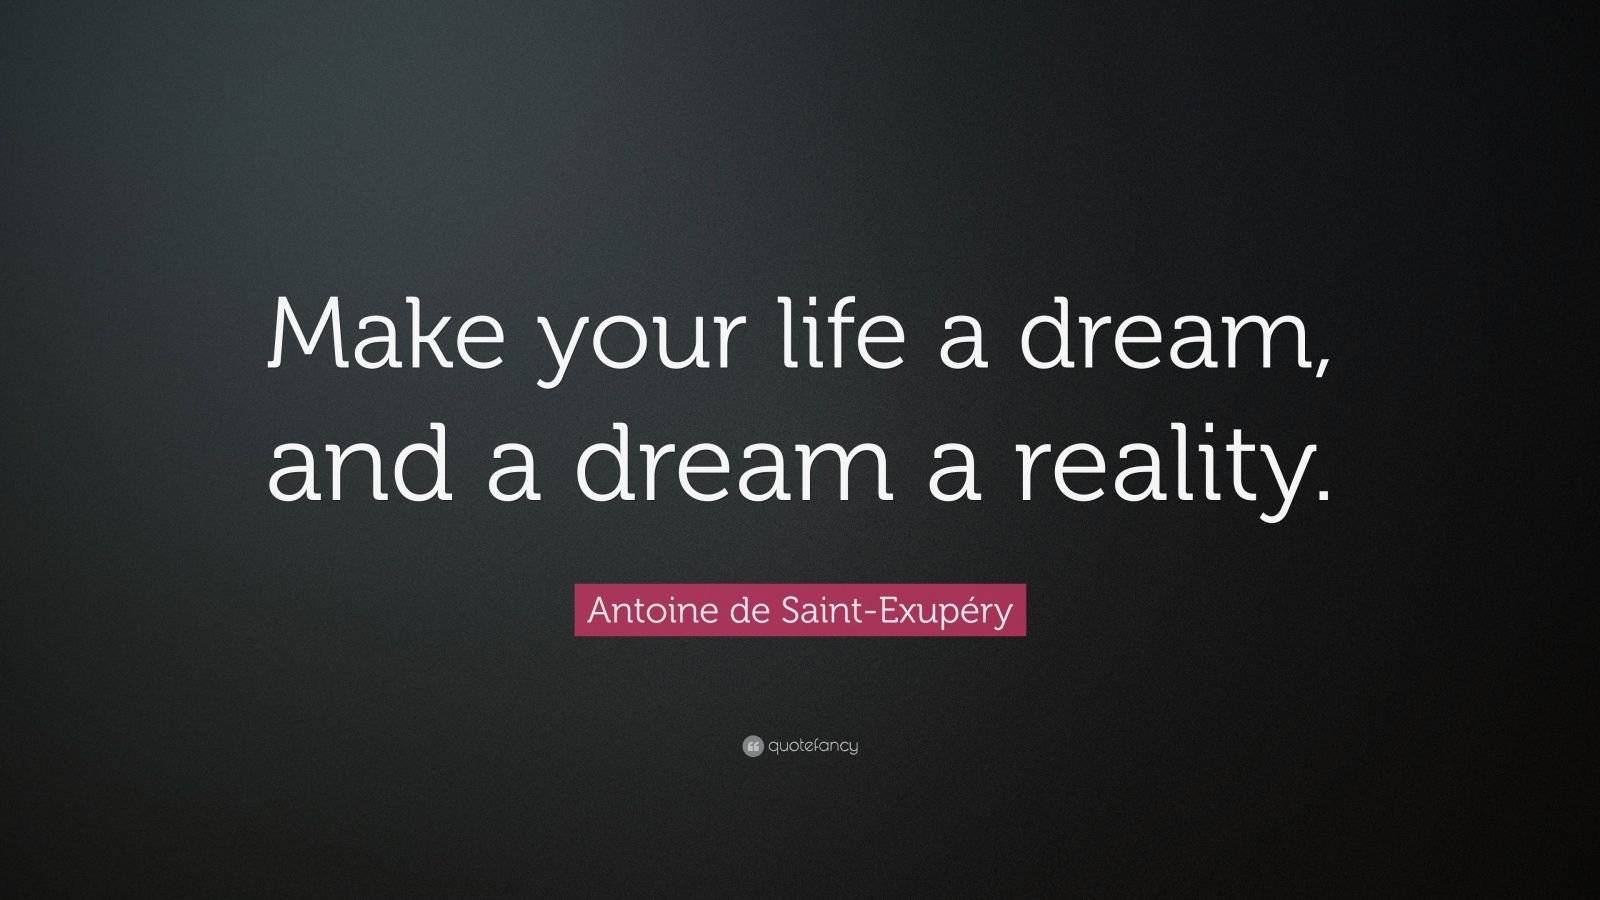 Antoine de Saint-Exupéry Quote: “Make your life a dream, and a dream a reality ...